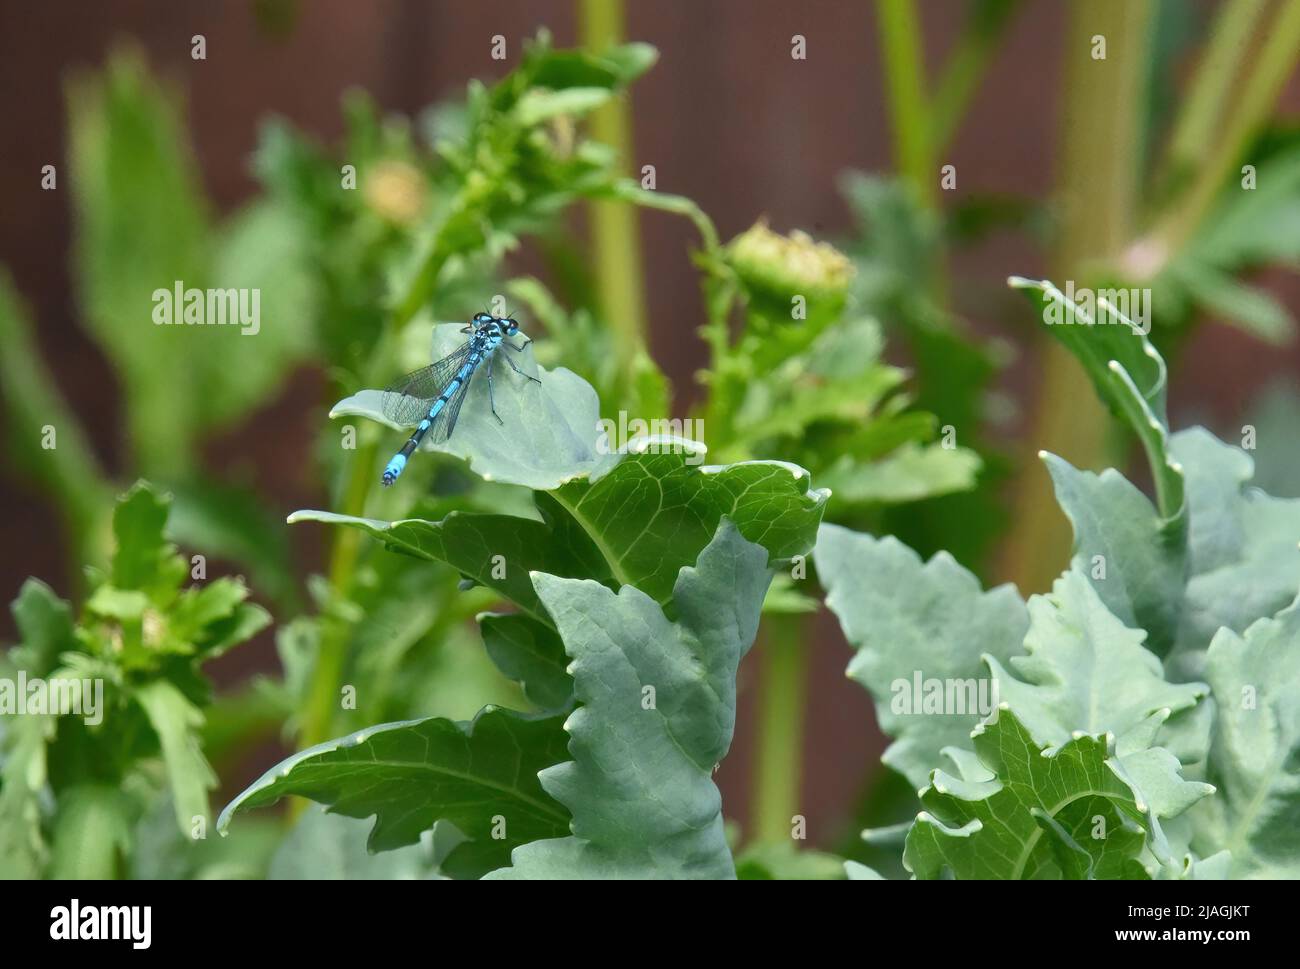 blue damsel fly on a leaf Stock Photo